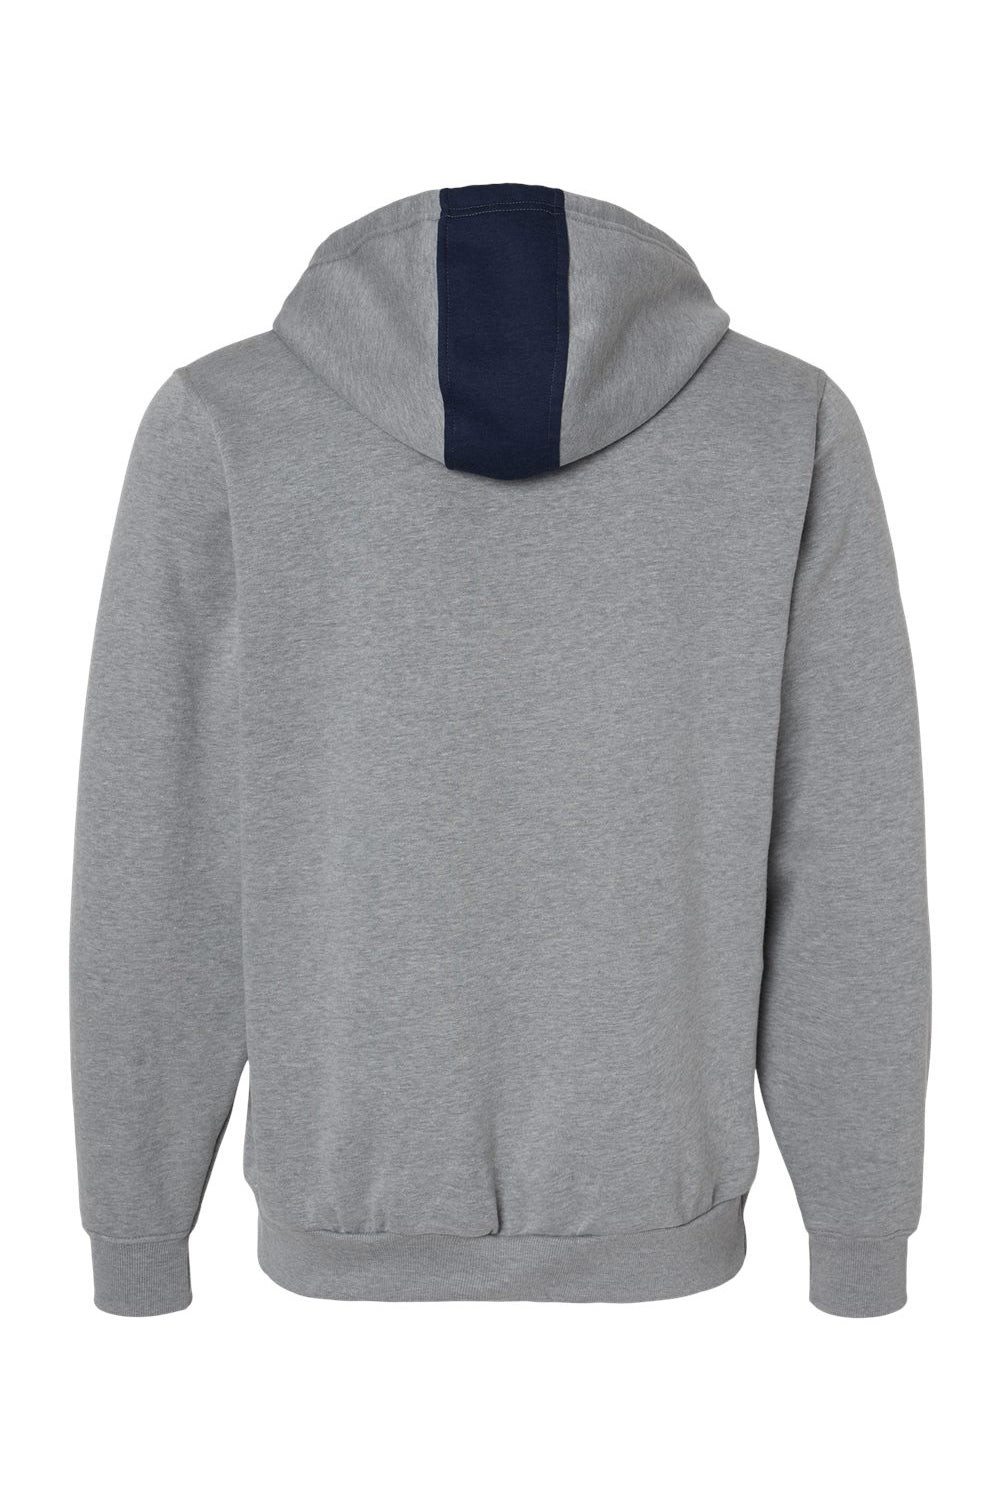 Augusta Sportswear 6865 Mens Eco Revive 3 Season Fleece Hooded Sweatshirt Hoodie Navy Blue/Heather Grey Flat Back